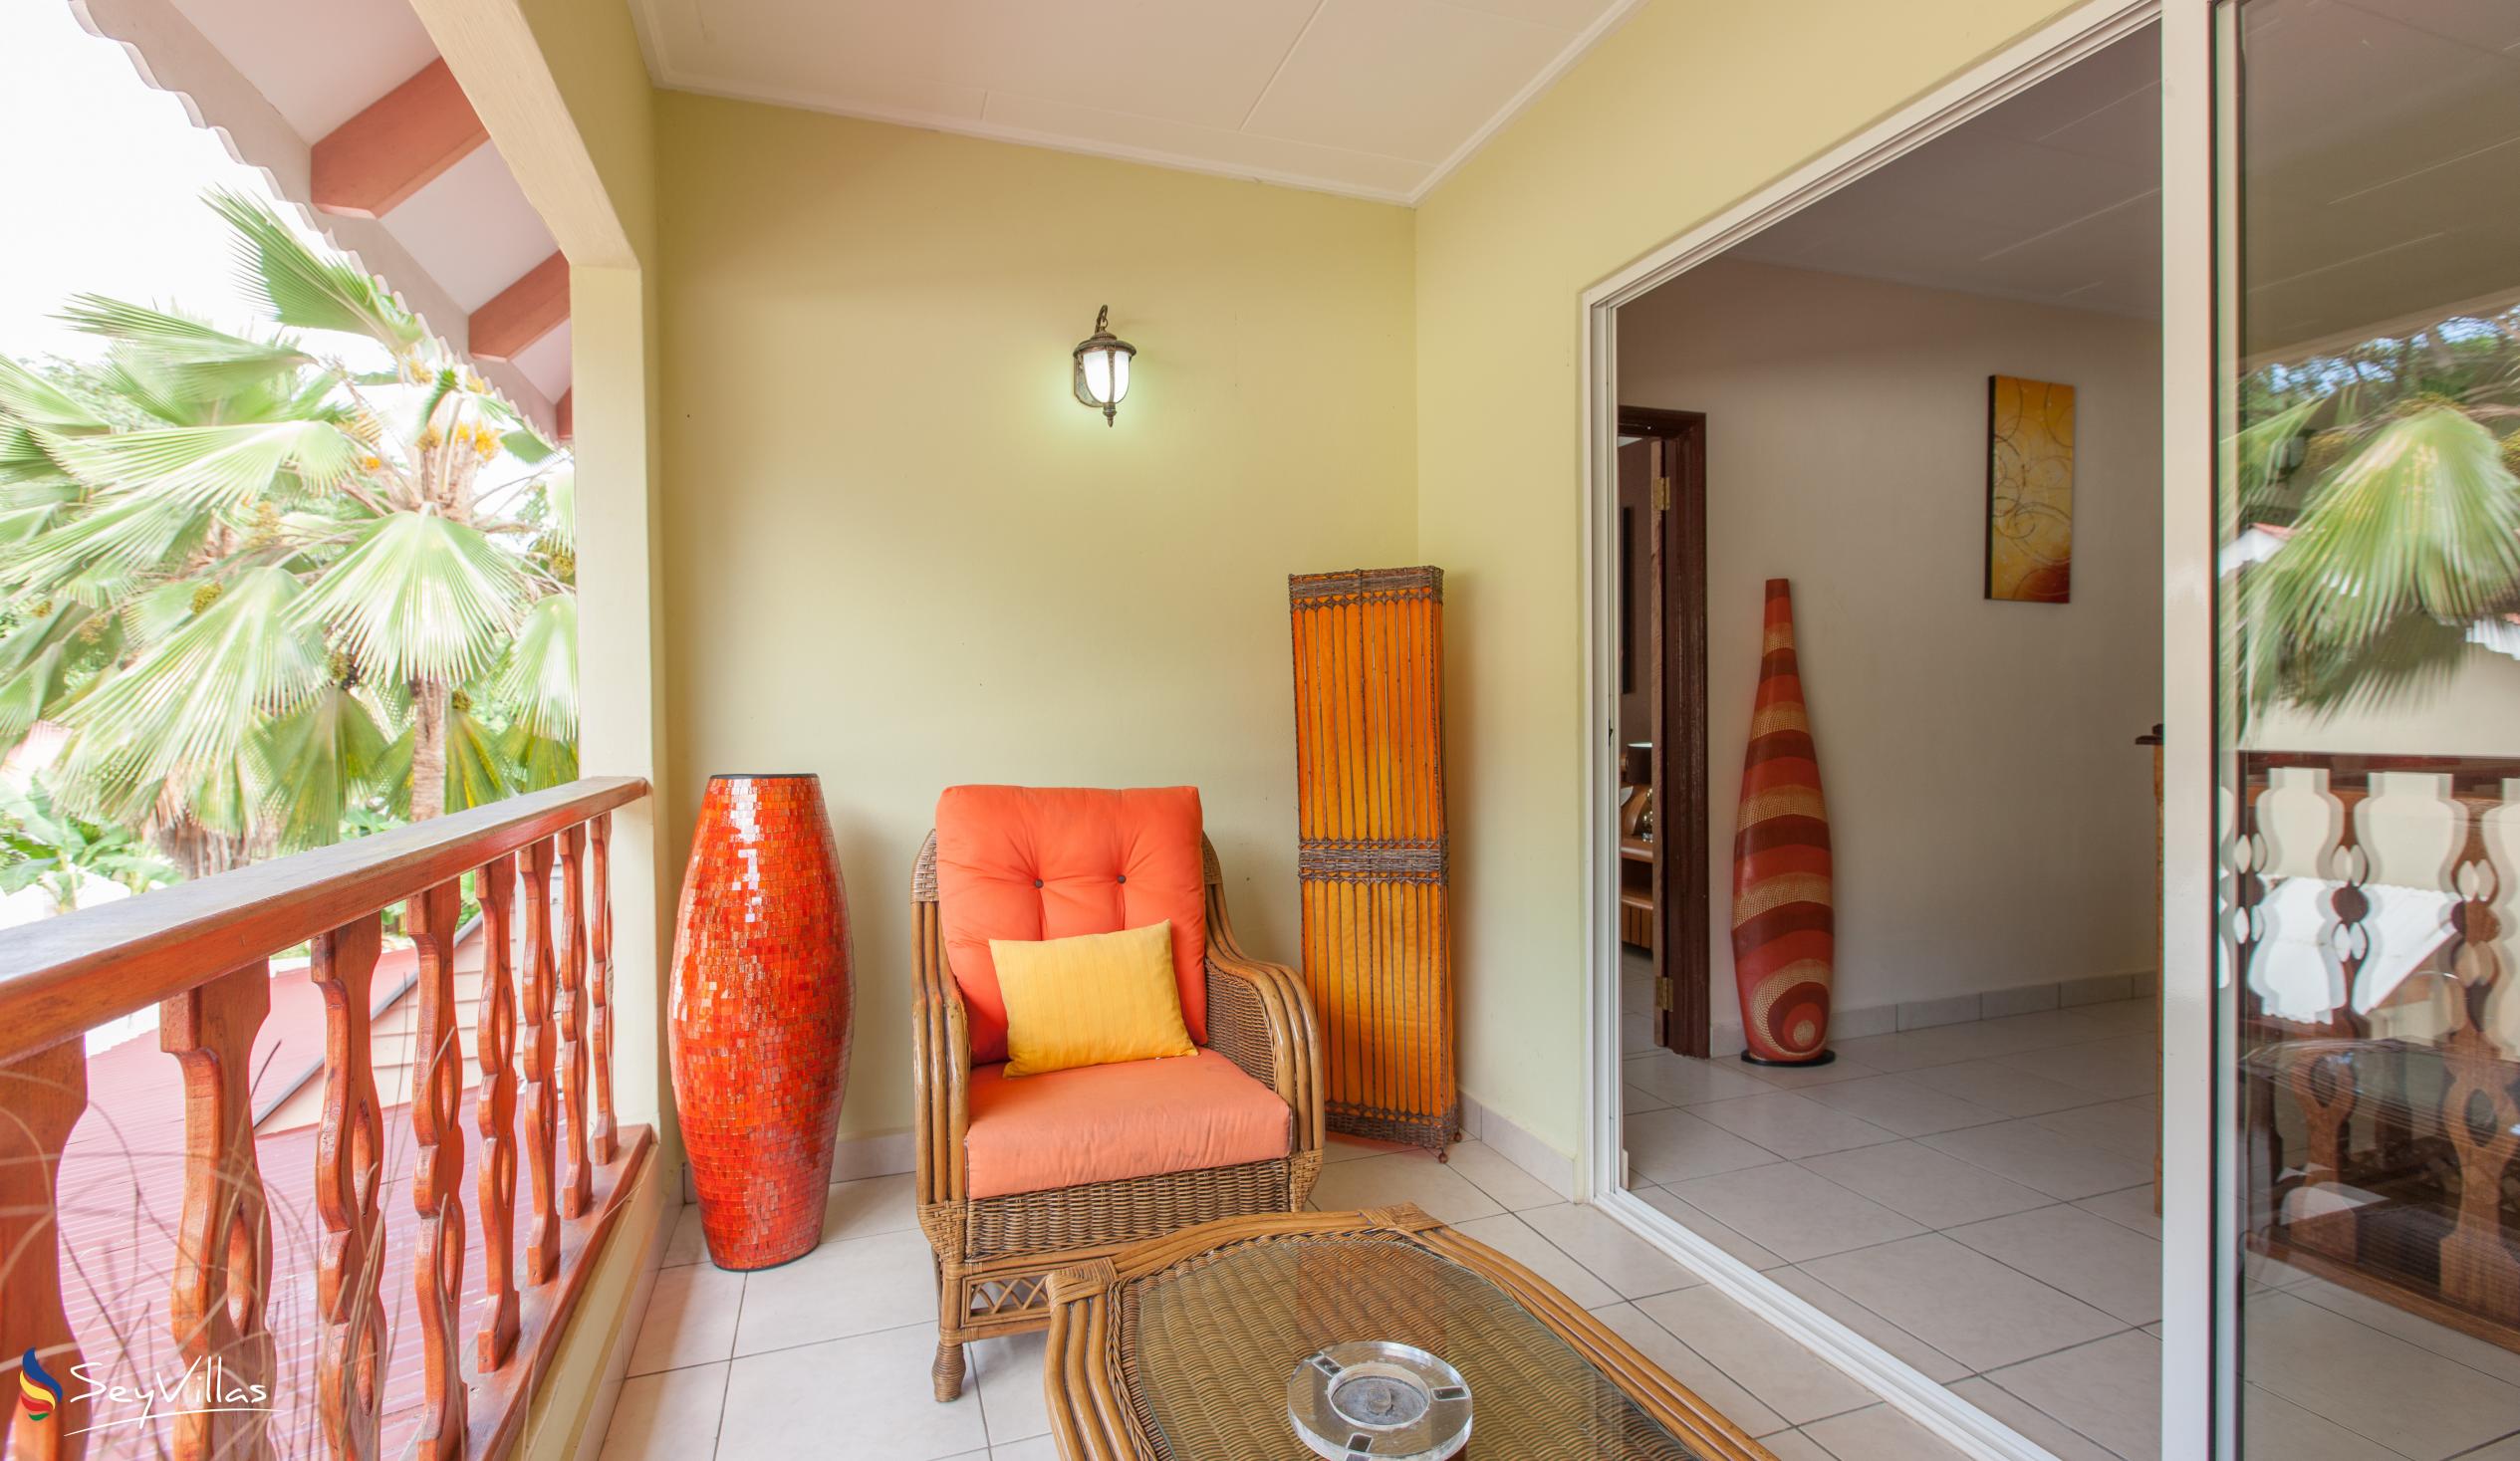 Foto 25: Villa Authentique - Chambre standard - La Digue (Seychelles)